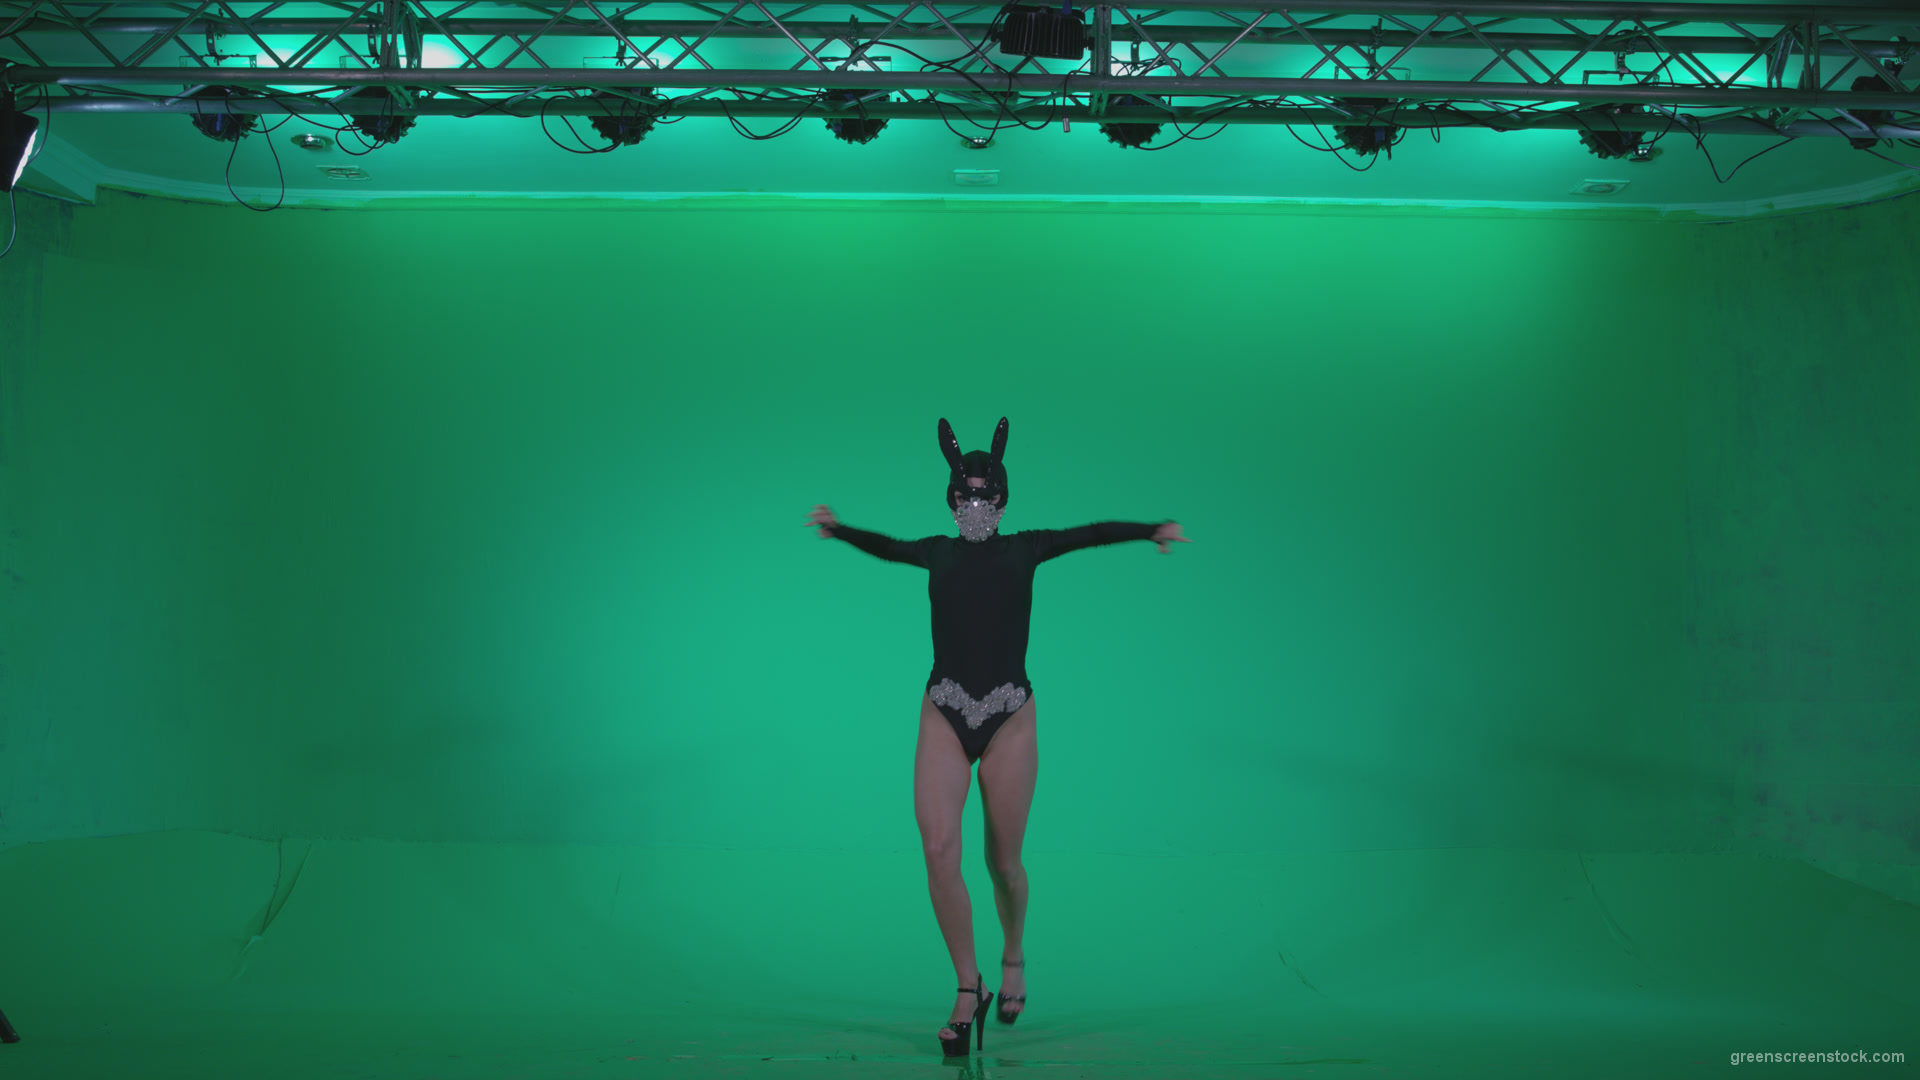 Go-go-Dancer-Black-Rabbit-u12-Green-Screen-Video-Footage_004 Green Screen Stock